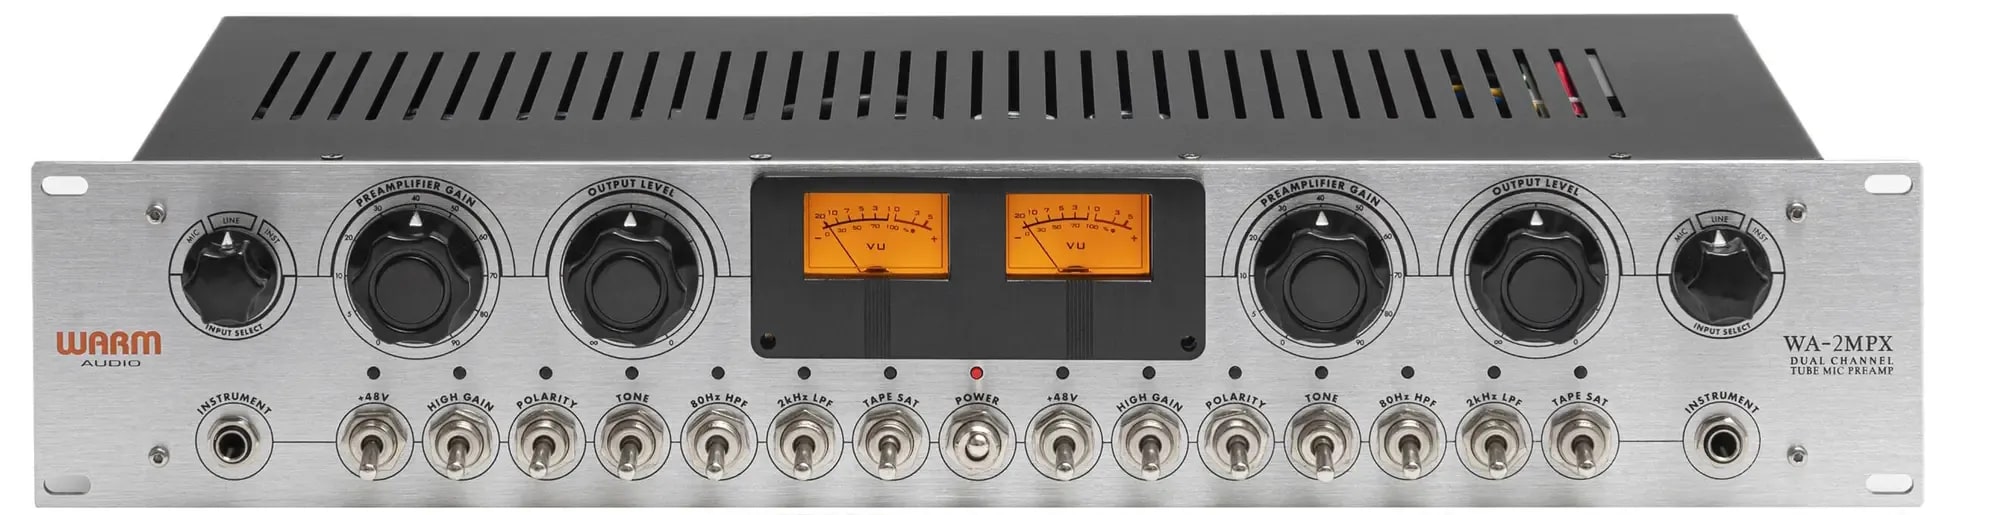 Микрофонные предусилители и микшеры Warm Audio WA-2MPX микрофонные предусилители и микшеры lavry engineering mp10